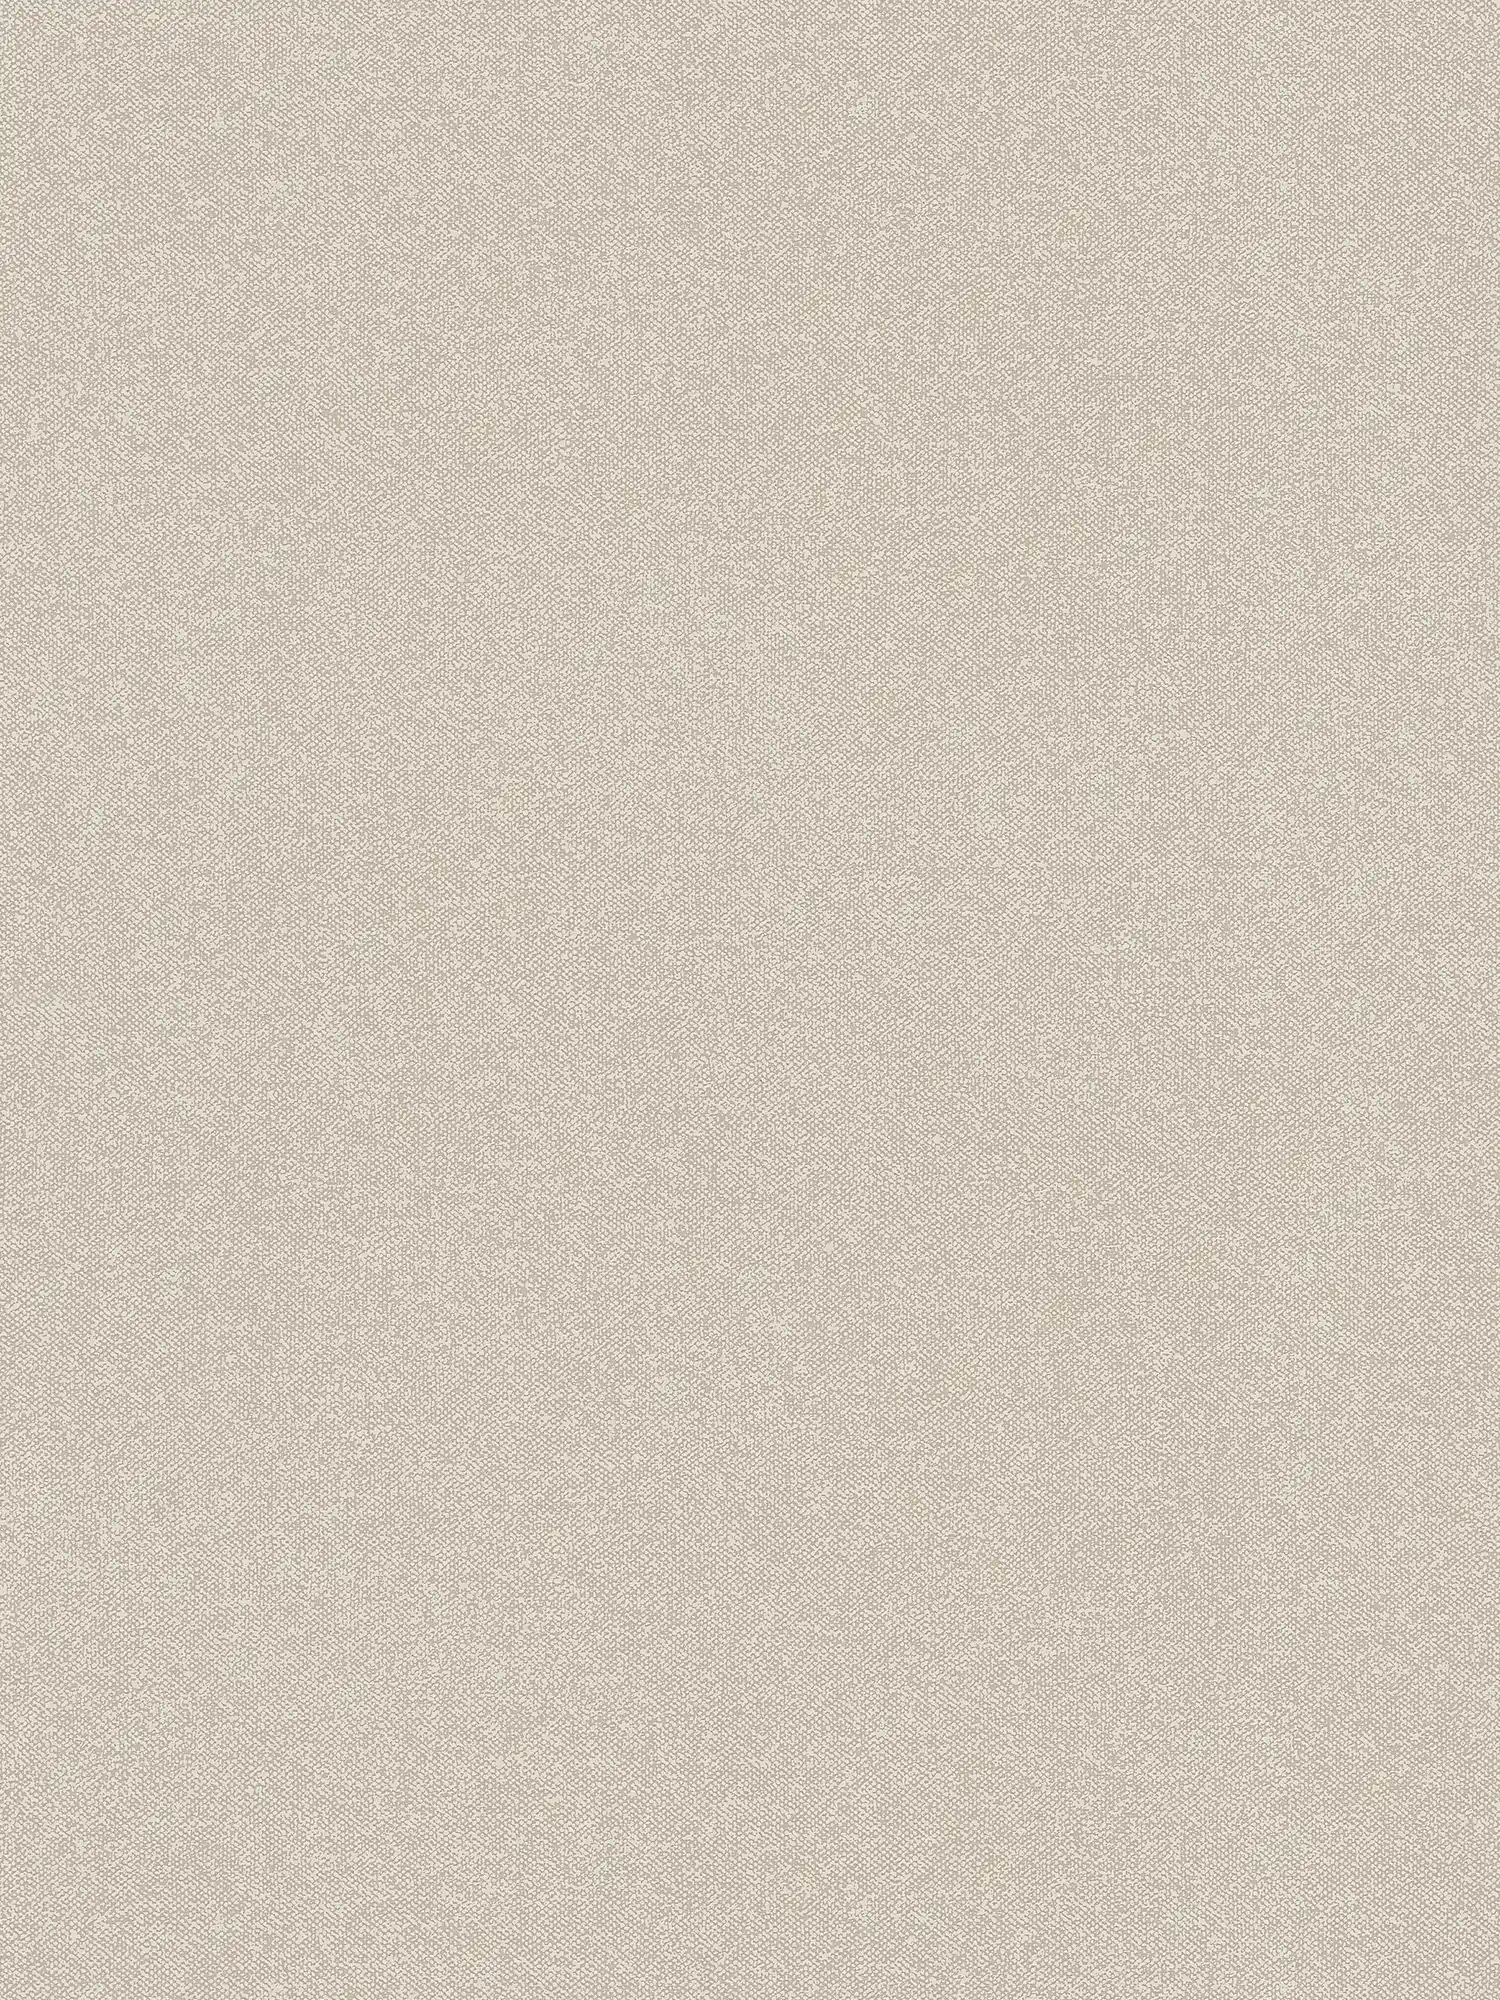 Textile optics wallpaper plain - beige, cream
